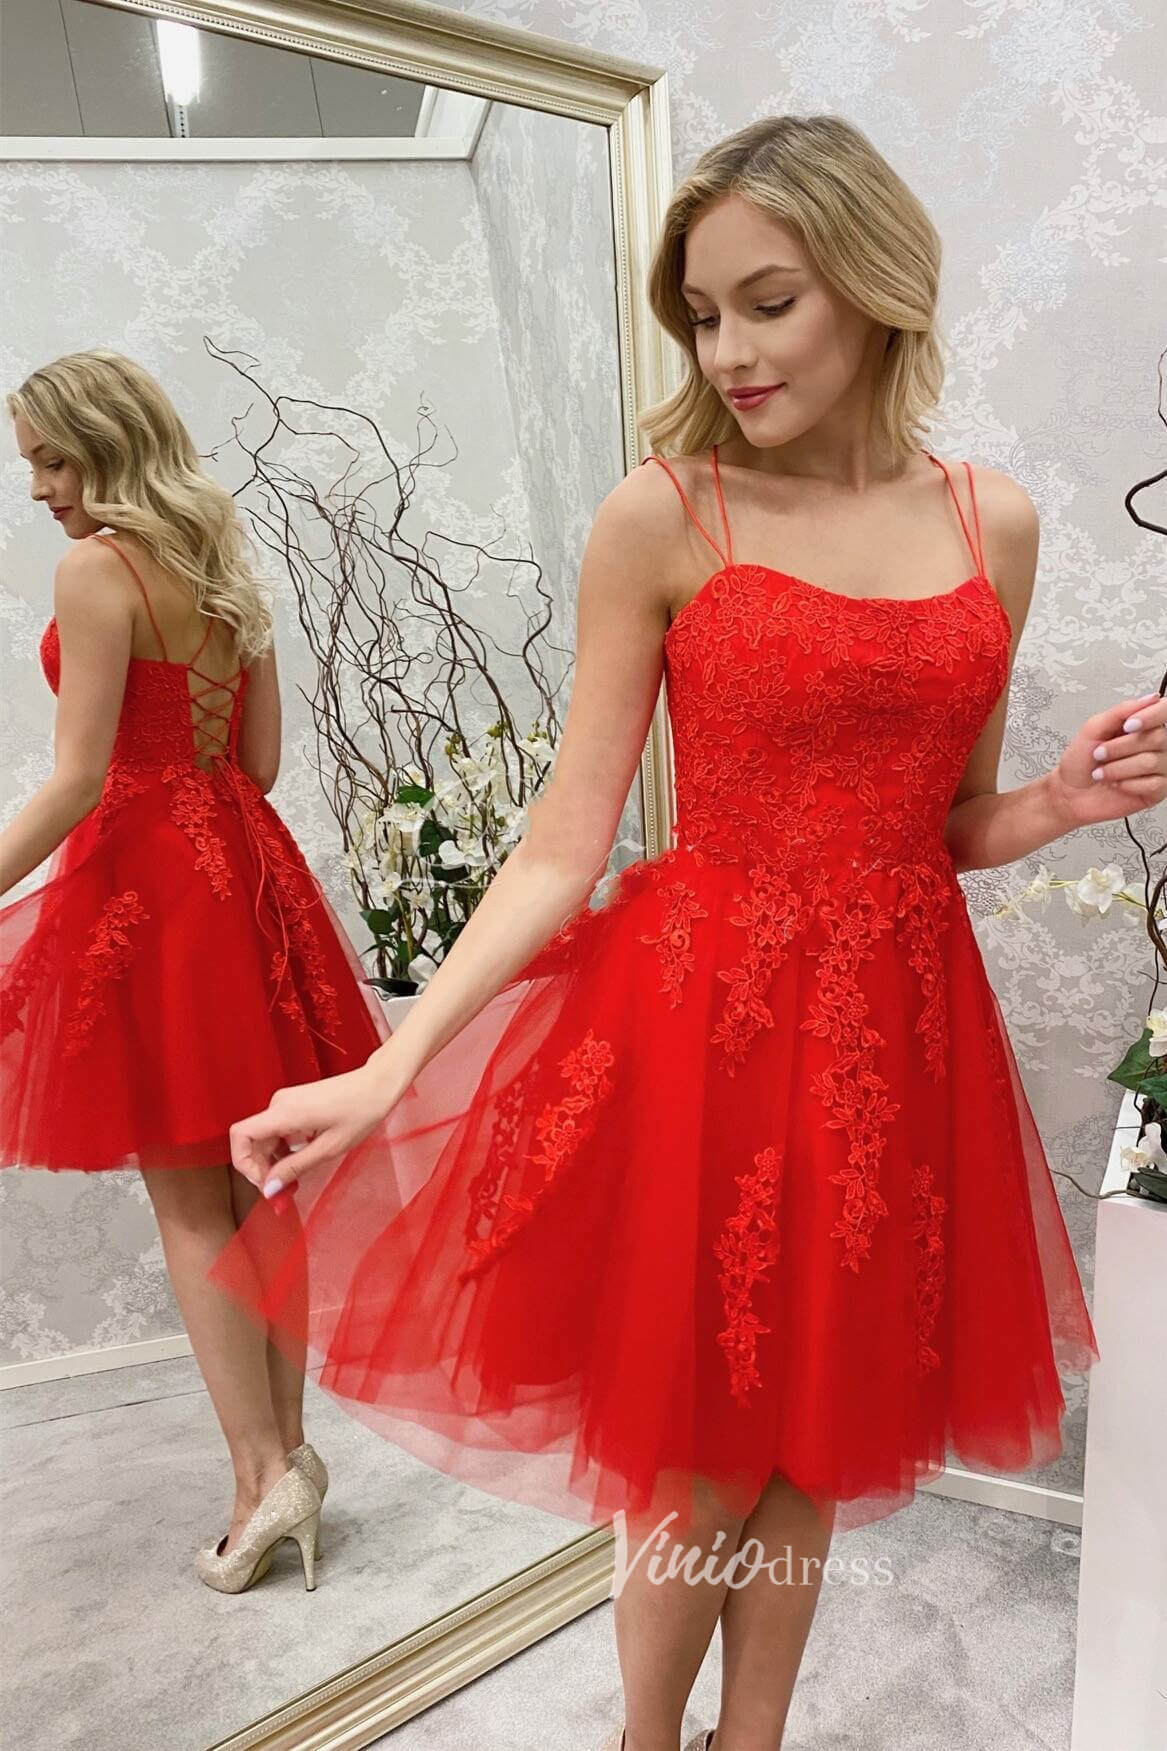 red dresses for juniors